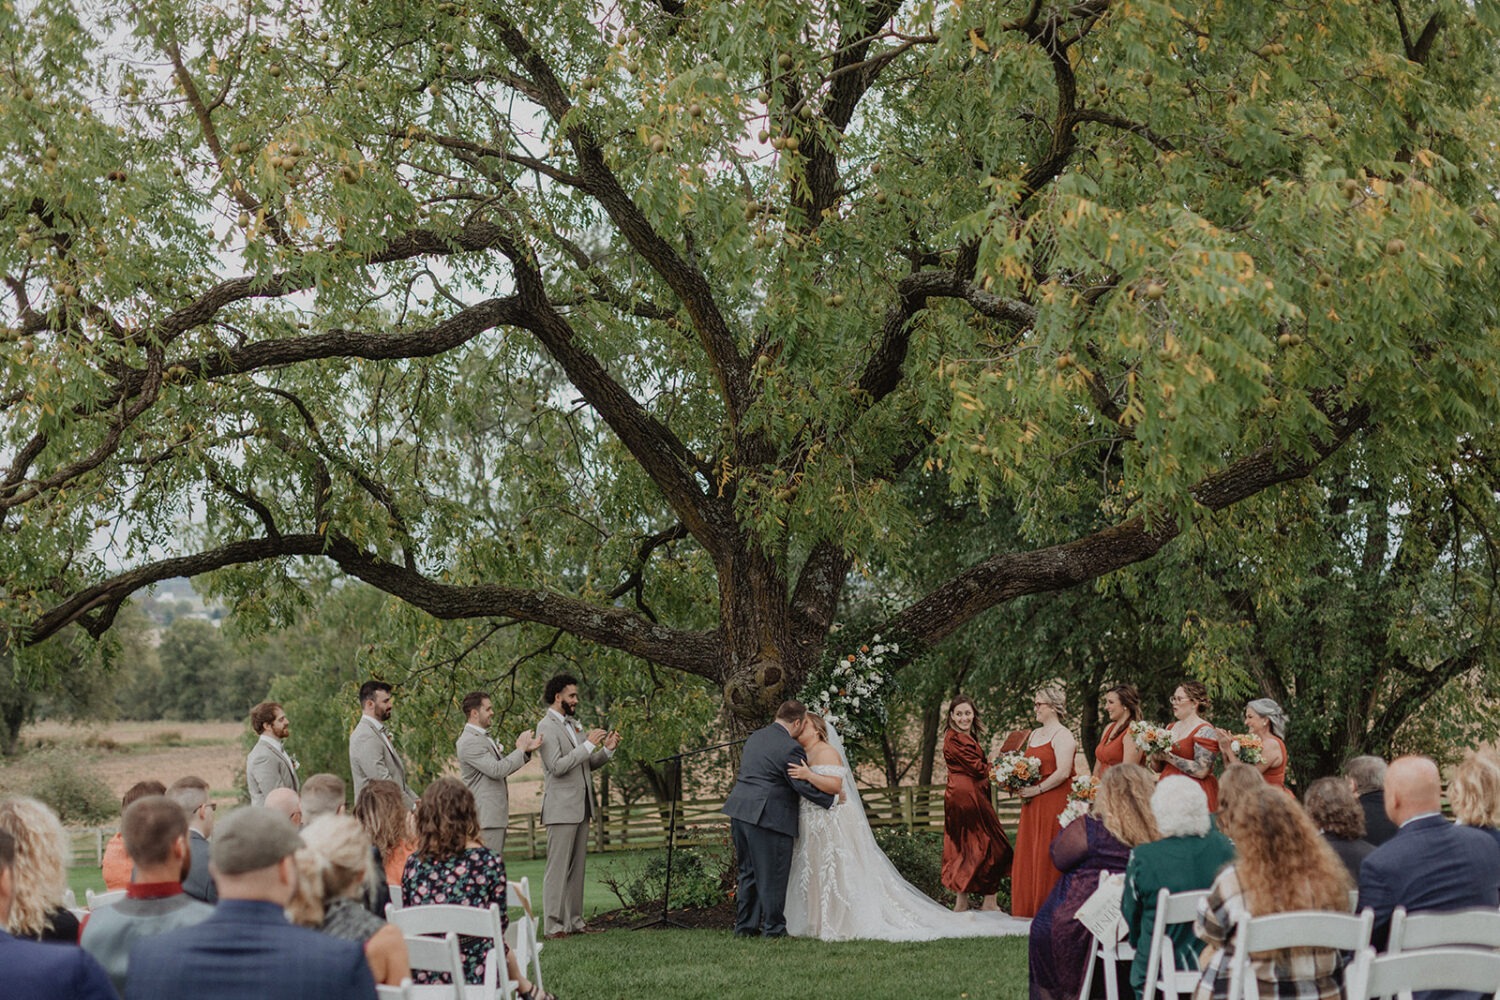 couple kisses under tree at outdoor Walker's Overlook farm wedding venue
 